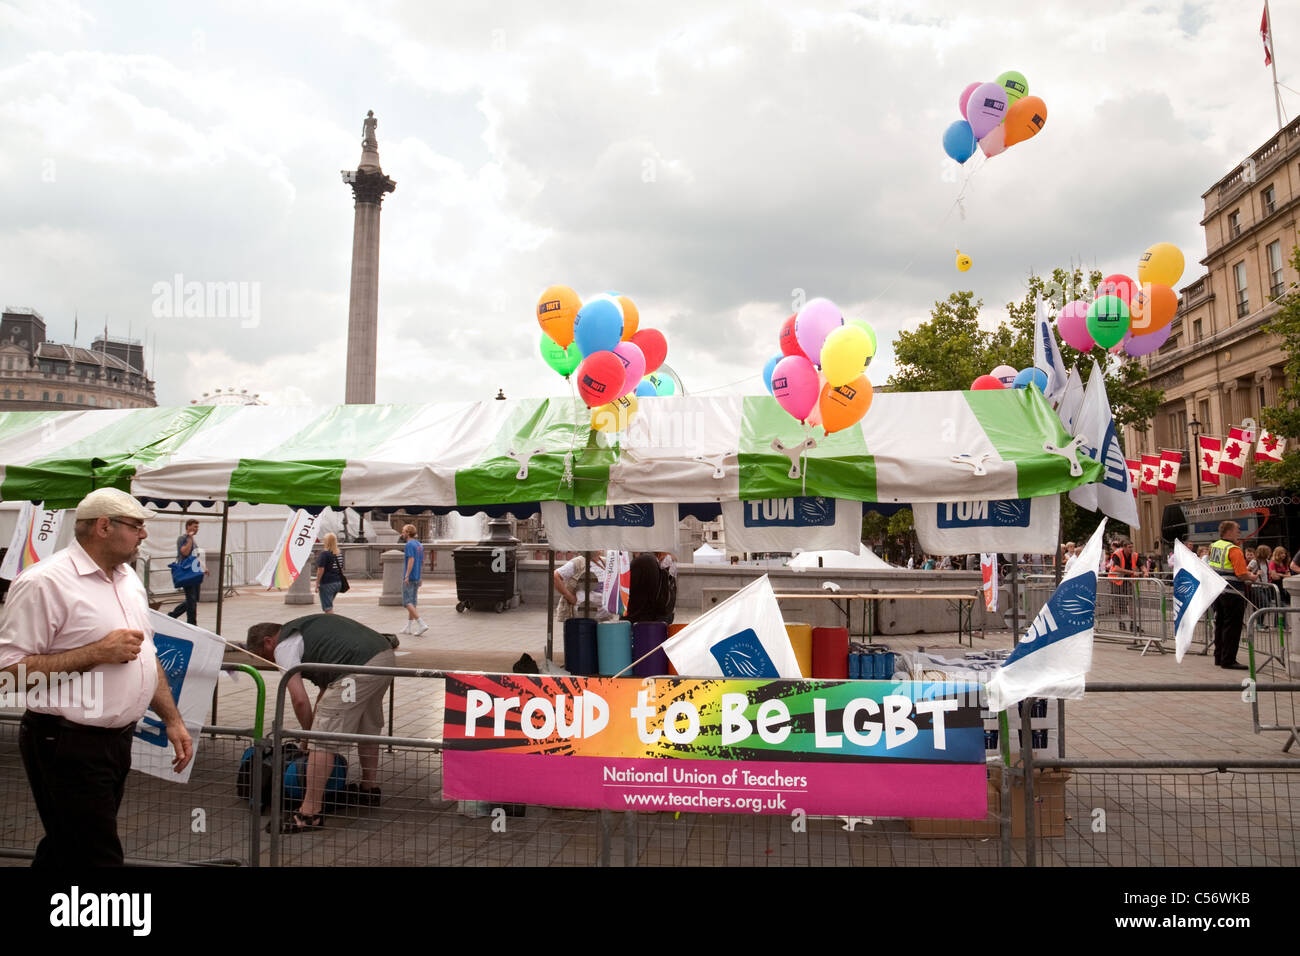 An NUT (National Union of Teachers) stall at an LGBT rally, Trafalgar Square, London UK Stock Photo